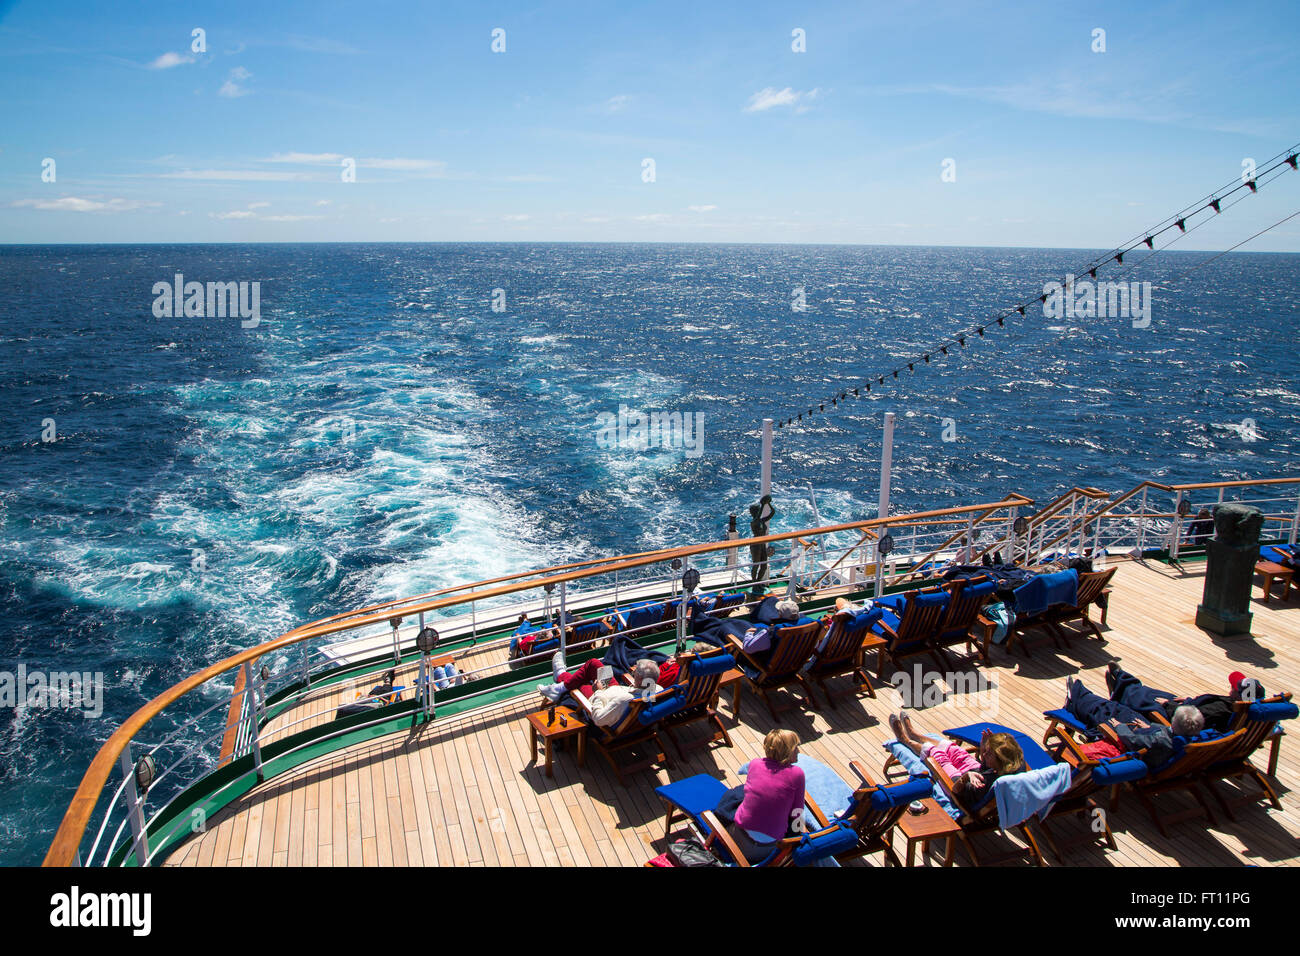 Passengers relaxing on the deck of cruise ship MS Deutschland Reederei Peter Deilmann, Atlantic Ocean, near Portugal Stock Photo